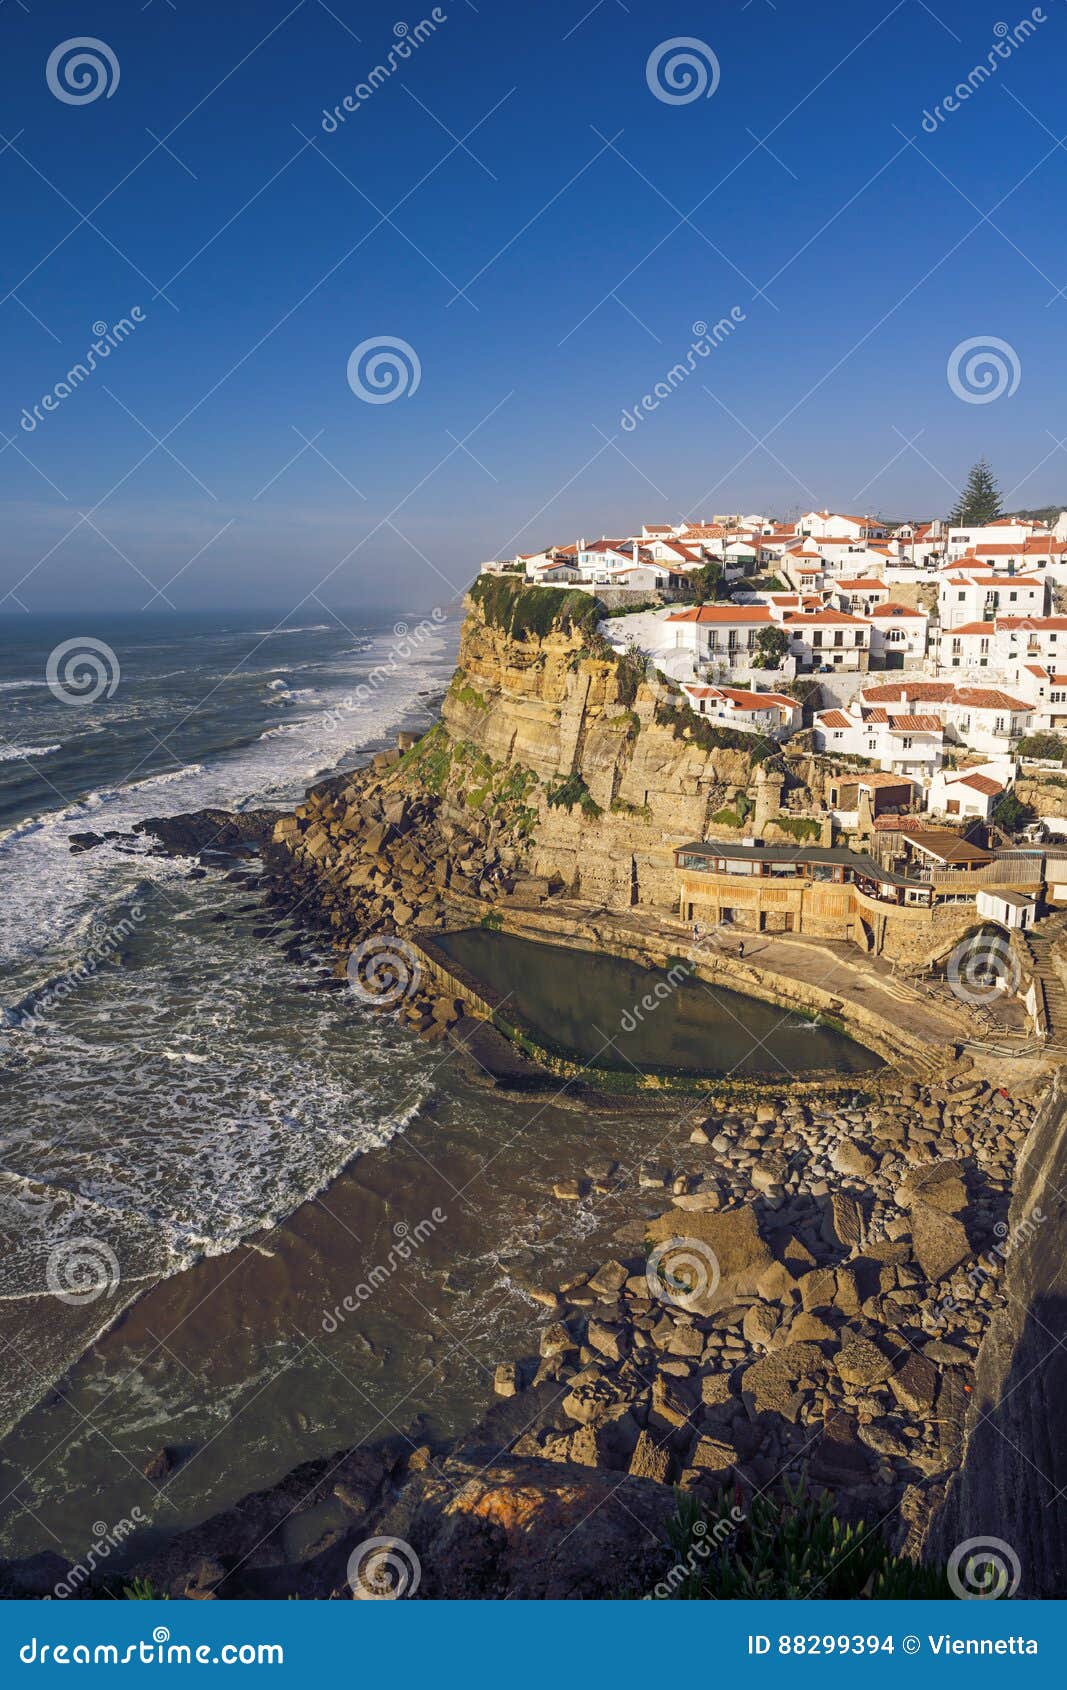 coastal azenhas do mar in portugal